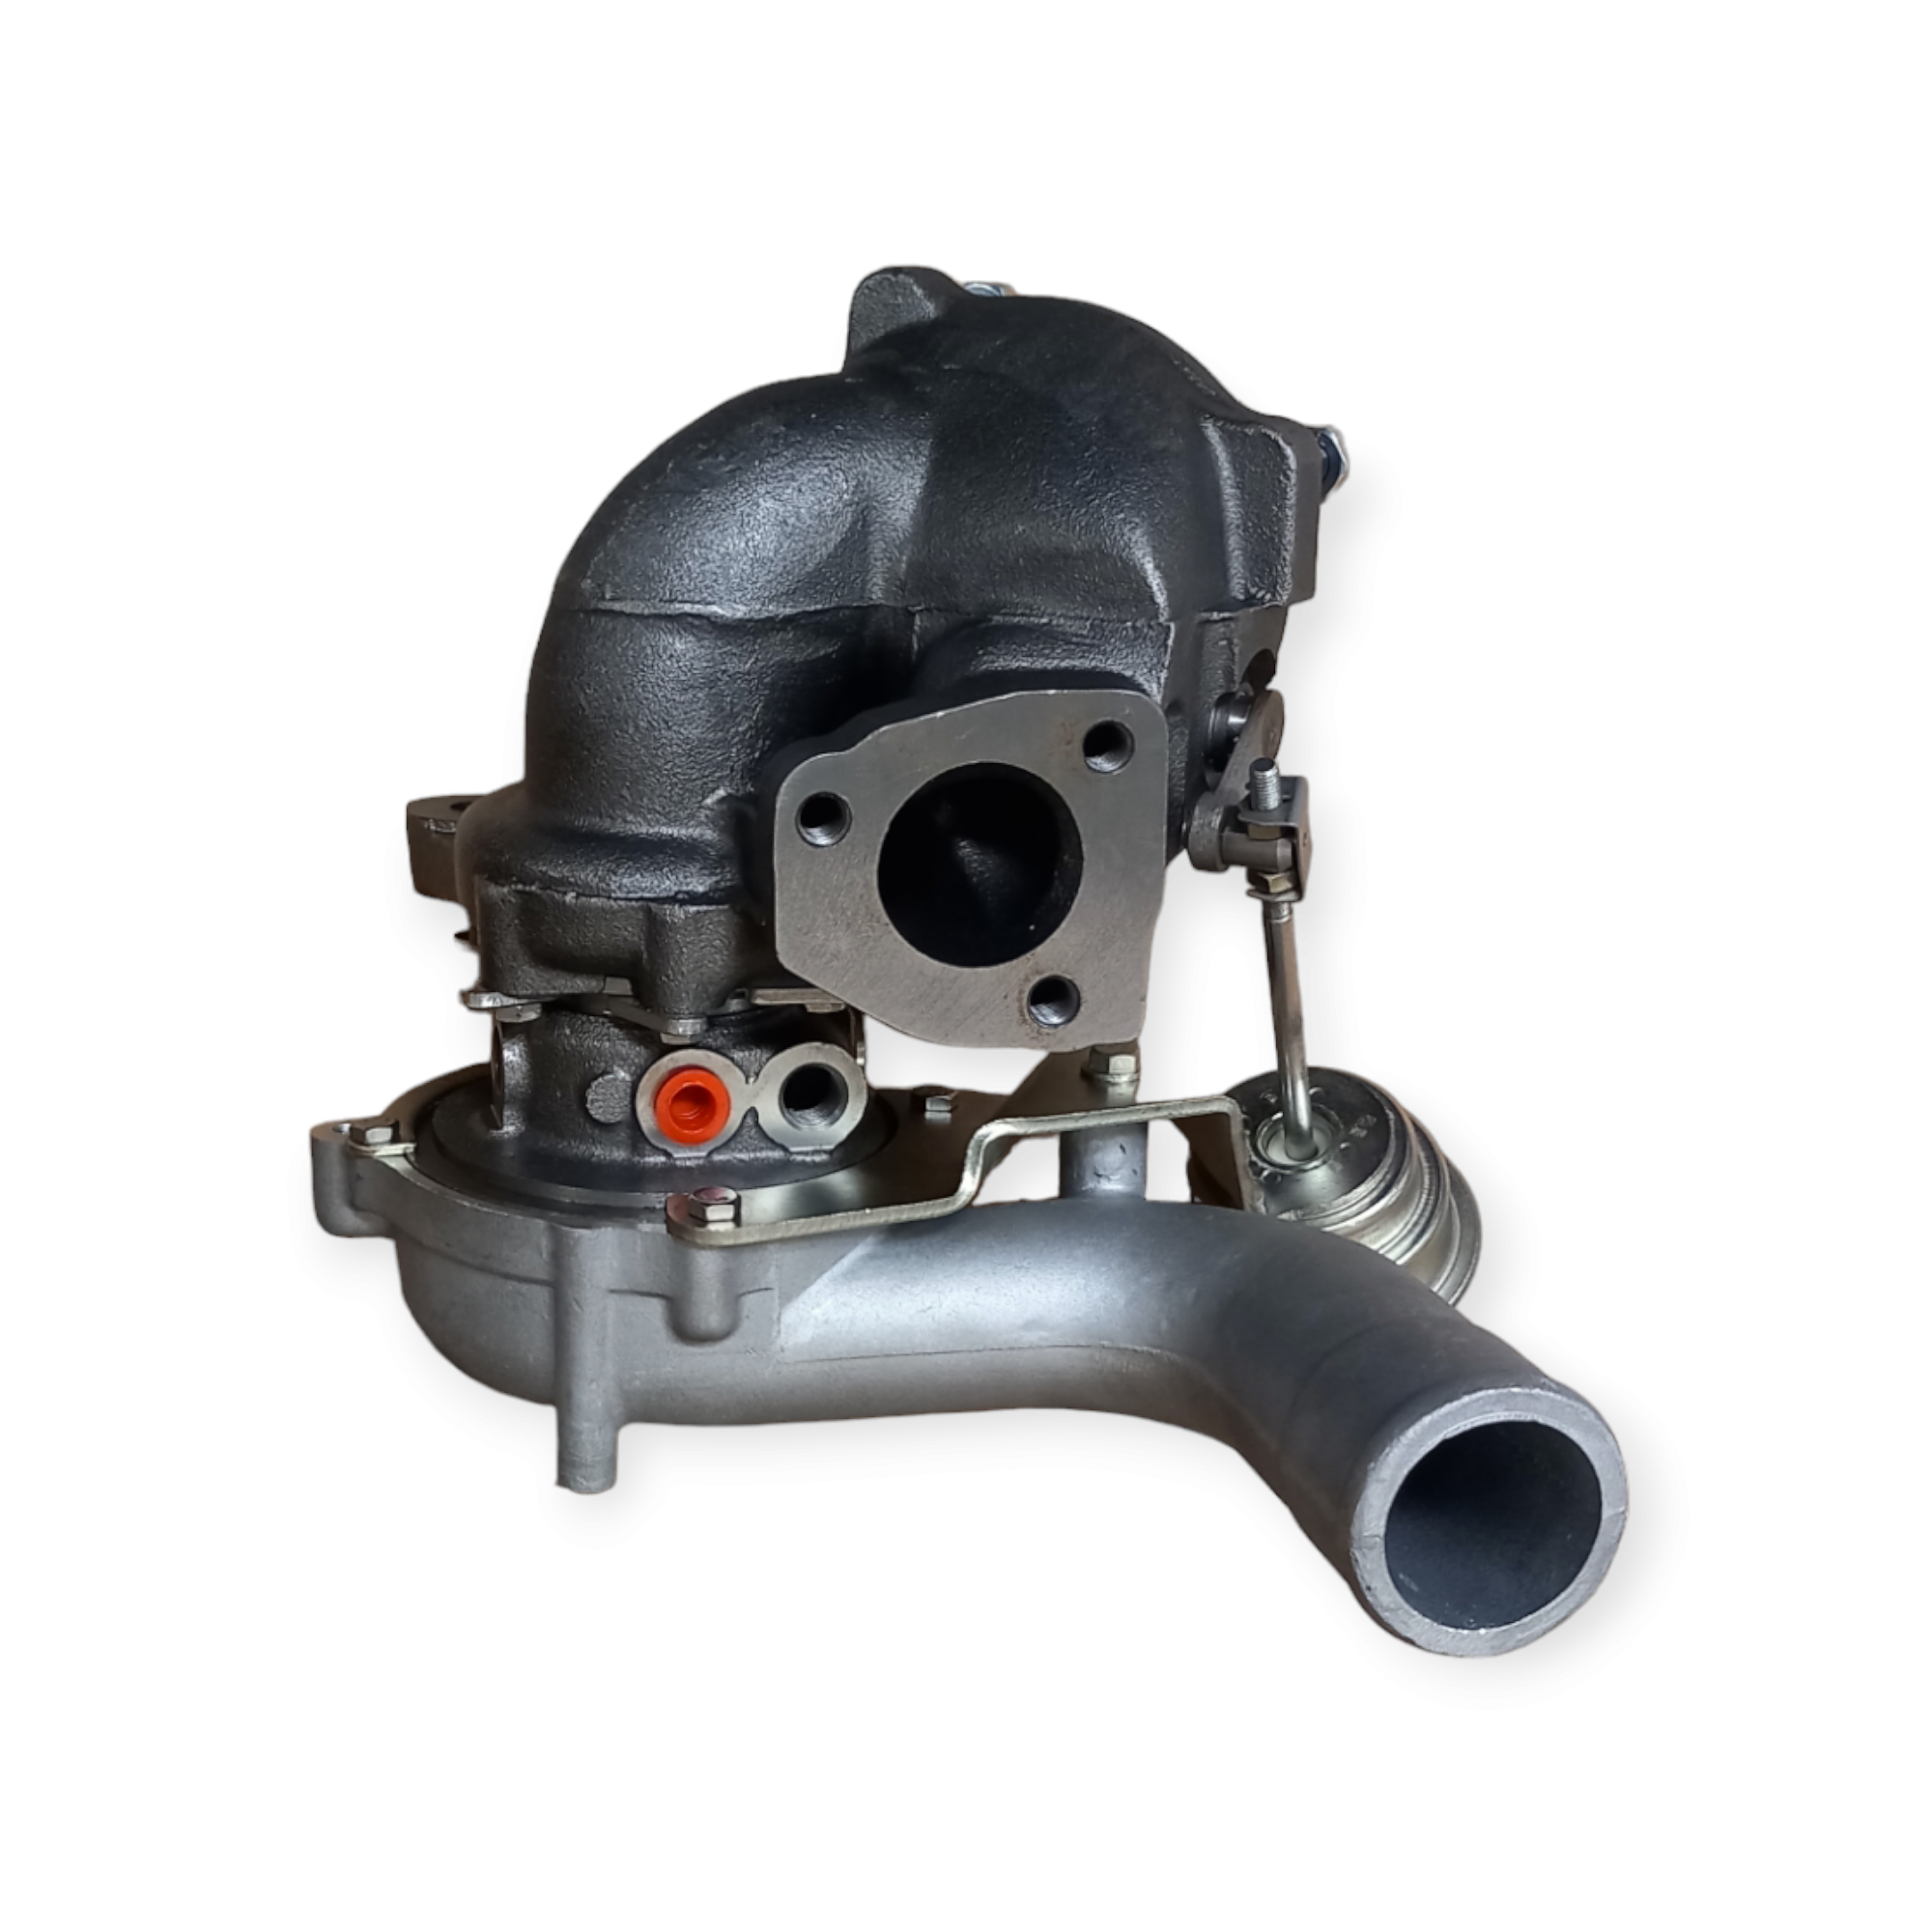 53039880053 K03 Turboshop fabriksny turbo